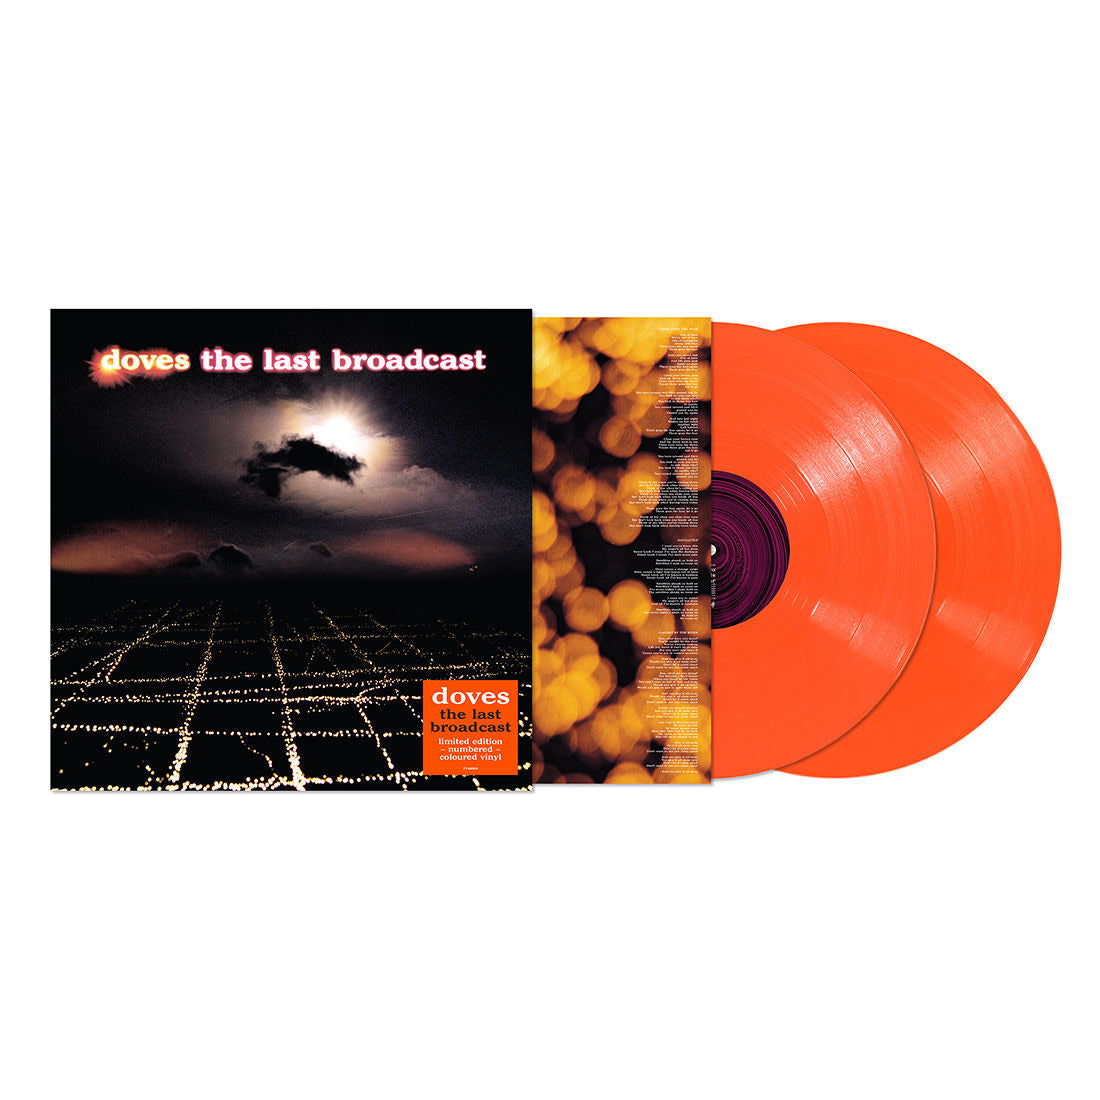 Doves - The Last Broadcast (2LP Limited Edition Orange Vinyl)